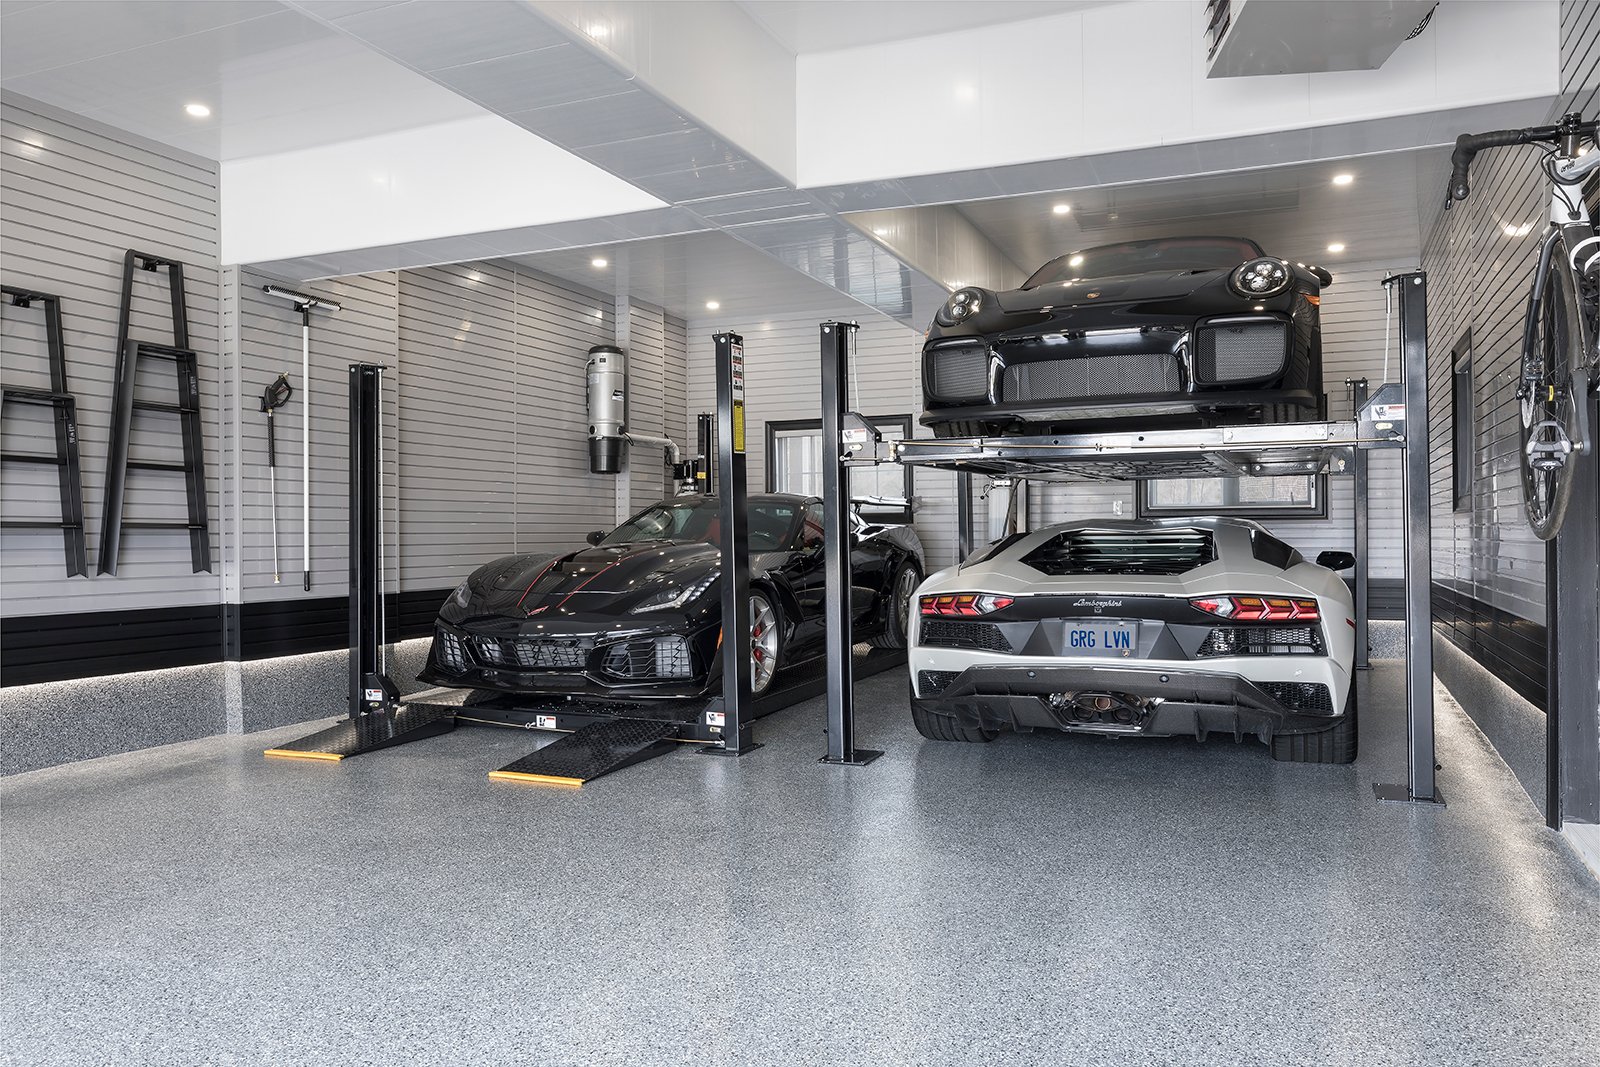 3 sportscars, 2 car lifts in garage